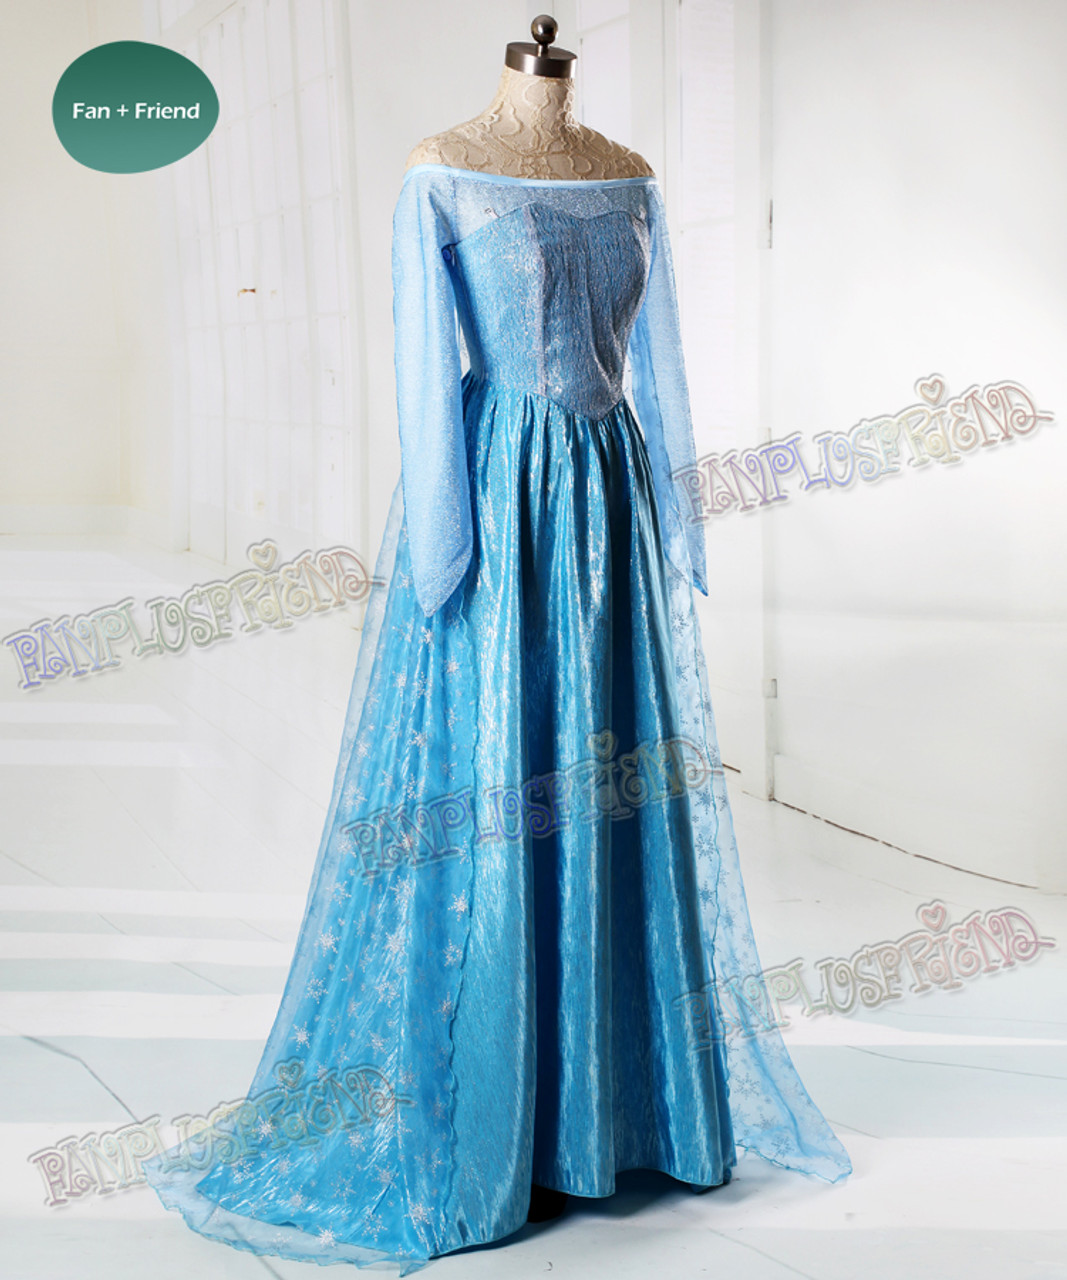 Disney Princess Frozen Elsa Costume, Blue | Awesome Costumes Singapore